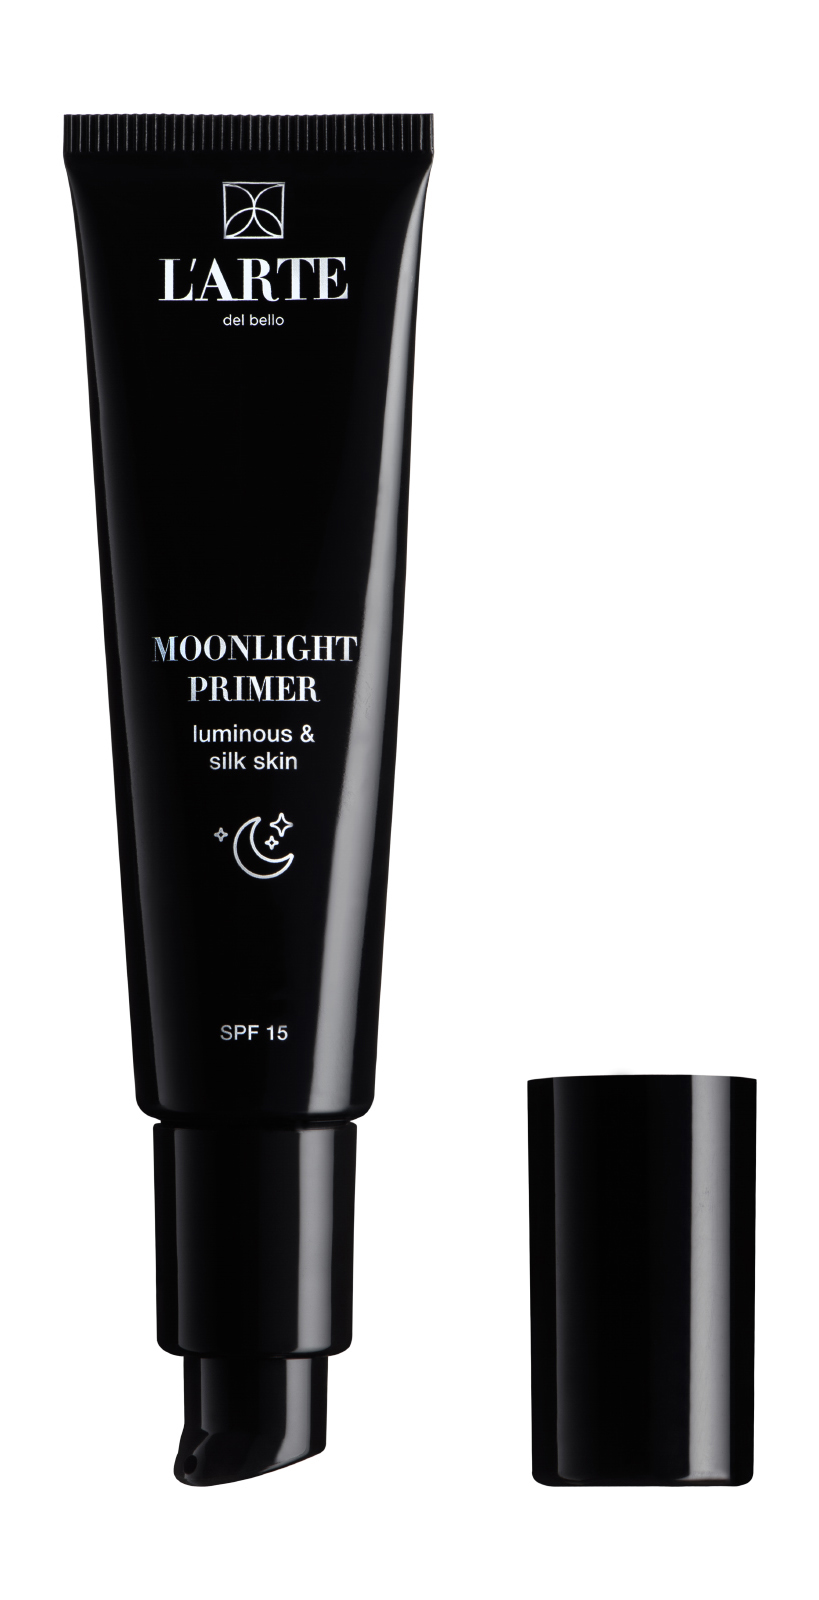 Праймер для сияния кожи лица, L'Arte del bello Moonlight Primer SPF 15, 30мл la mer праймер для придания сияния skincolor illuminator